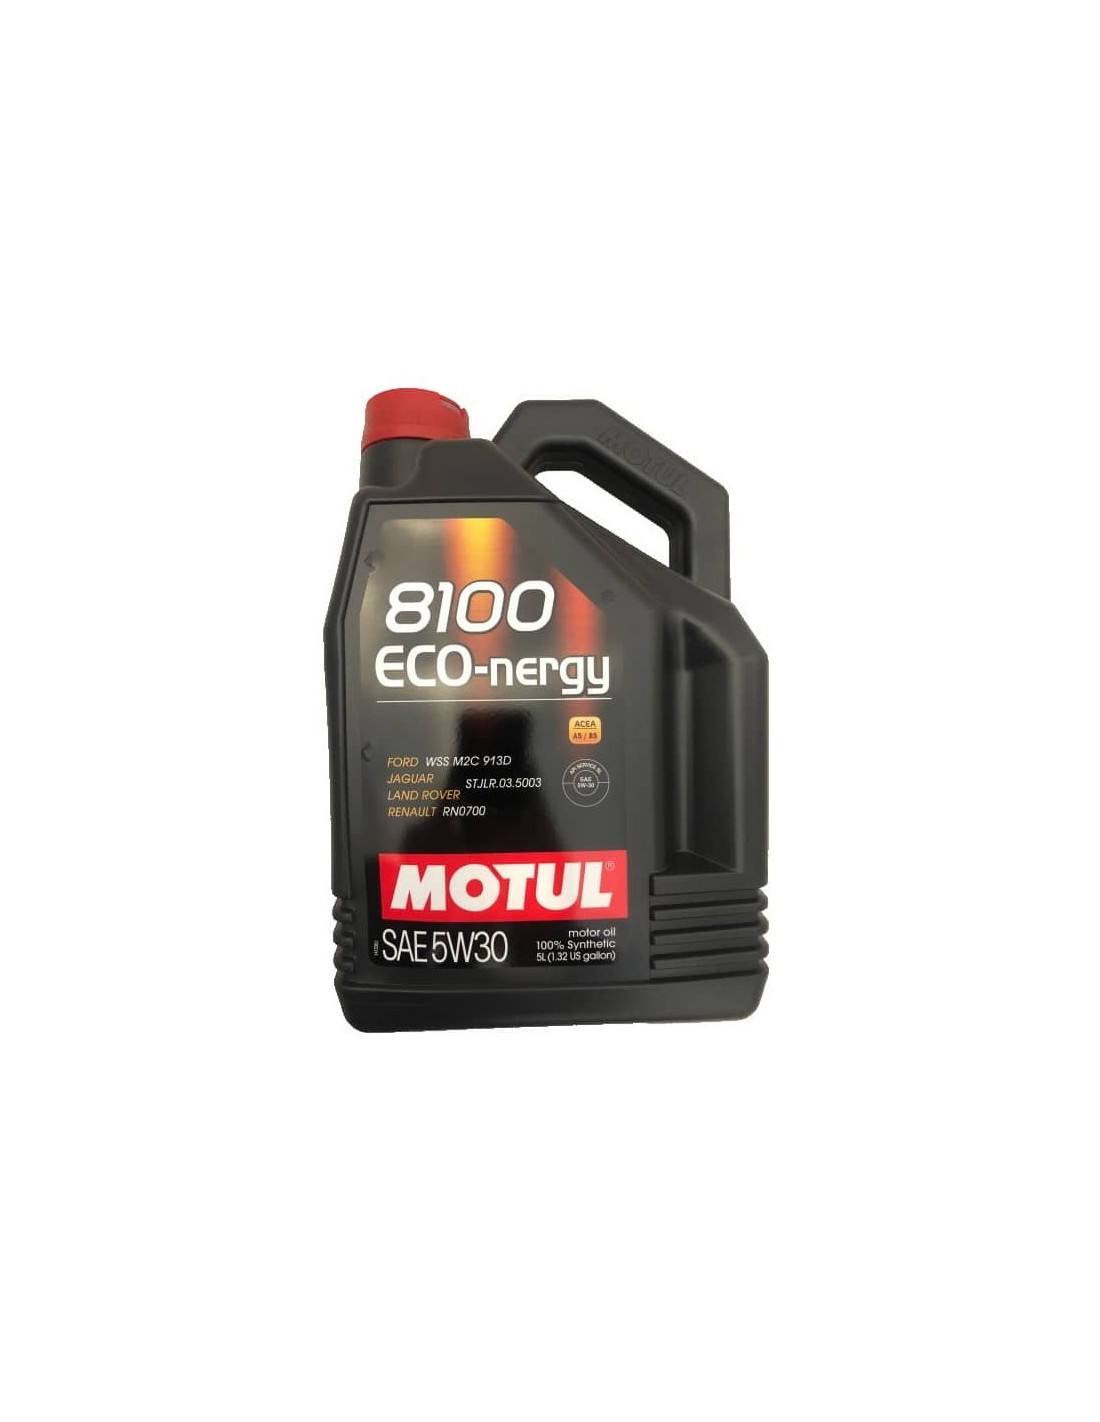 Aceite MOTUL 8100 Eco-Nergy 0W30 5L - Precio: 40,22 € - Megataller